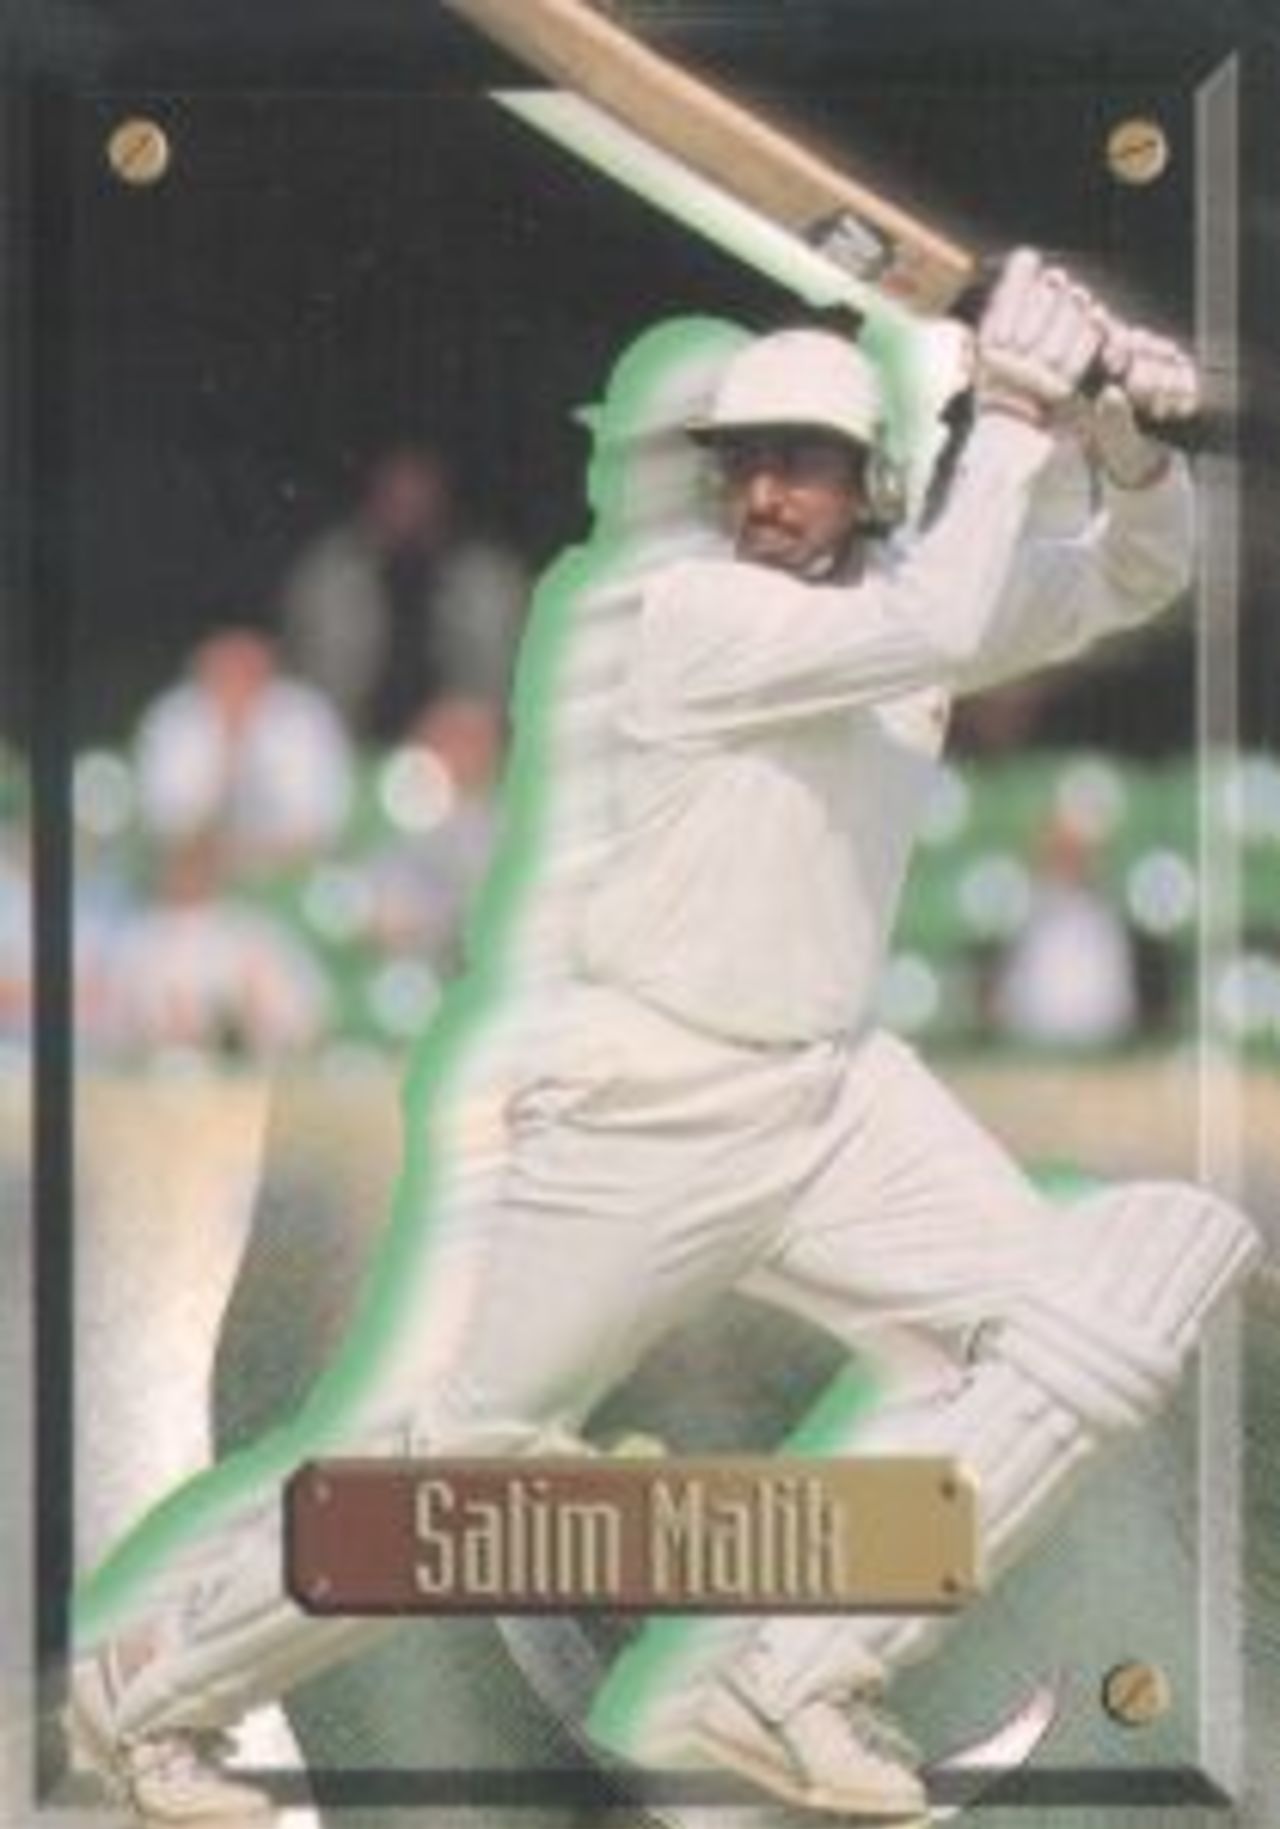 Trade card: Top deck Salim Malik